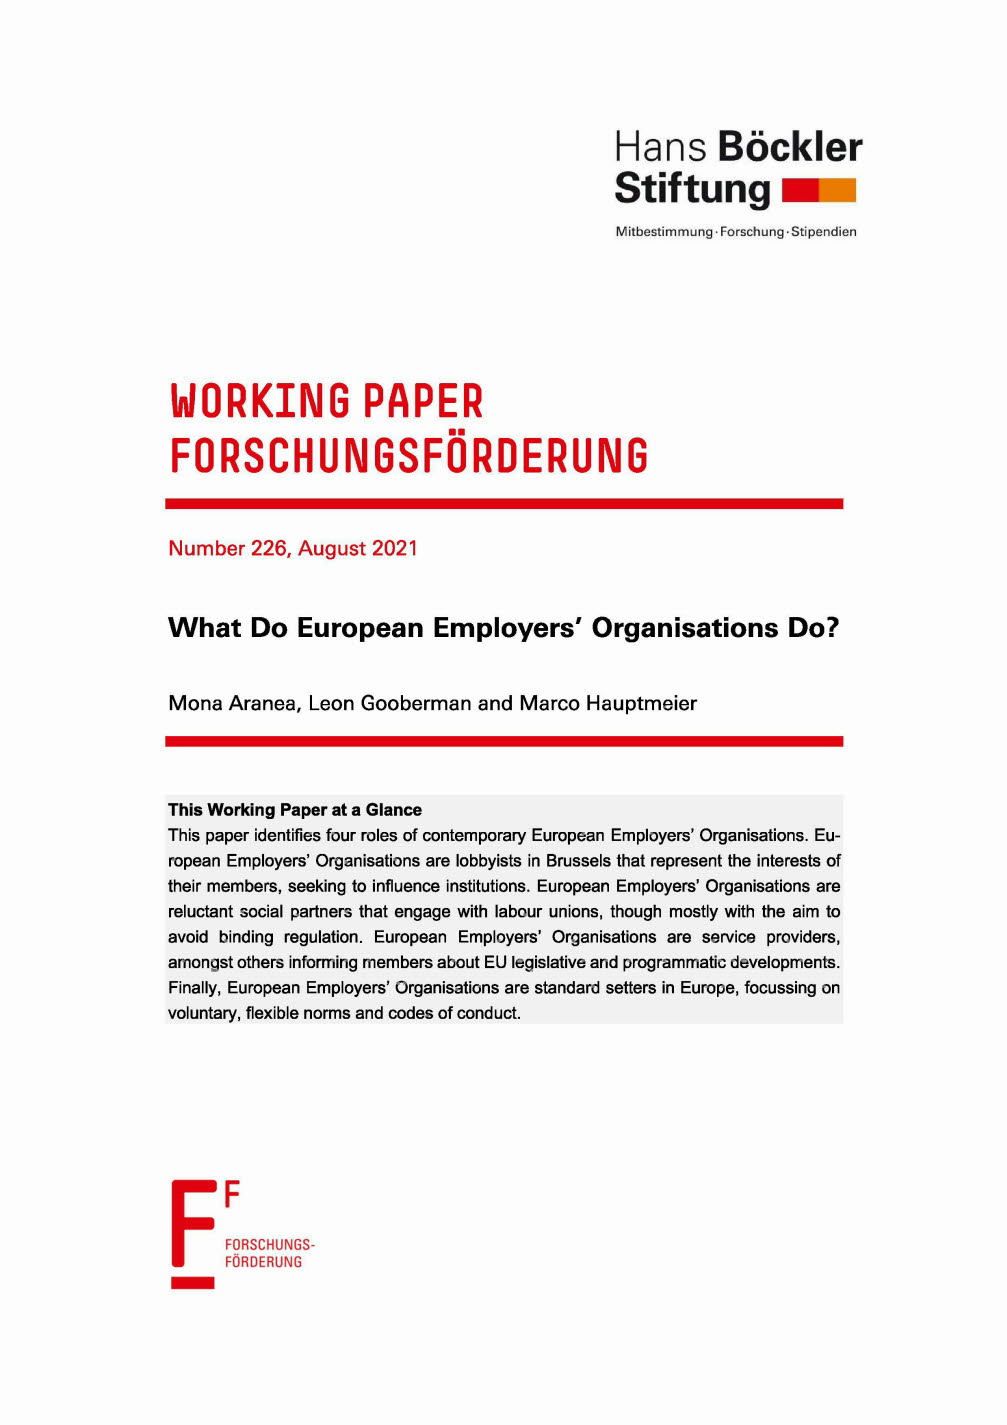 What do European Employers` Organisations do?